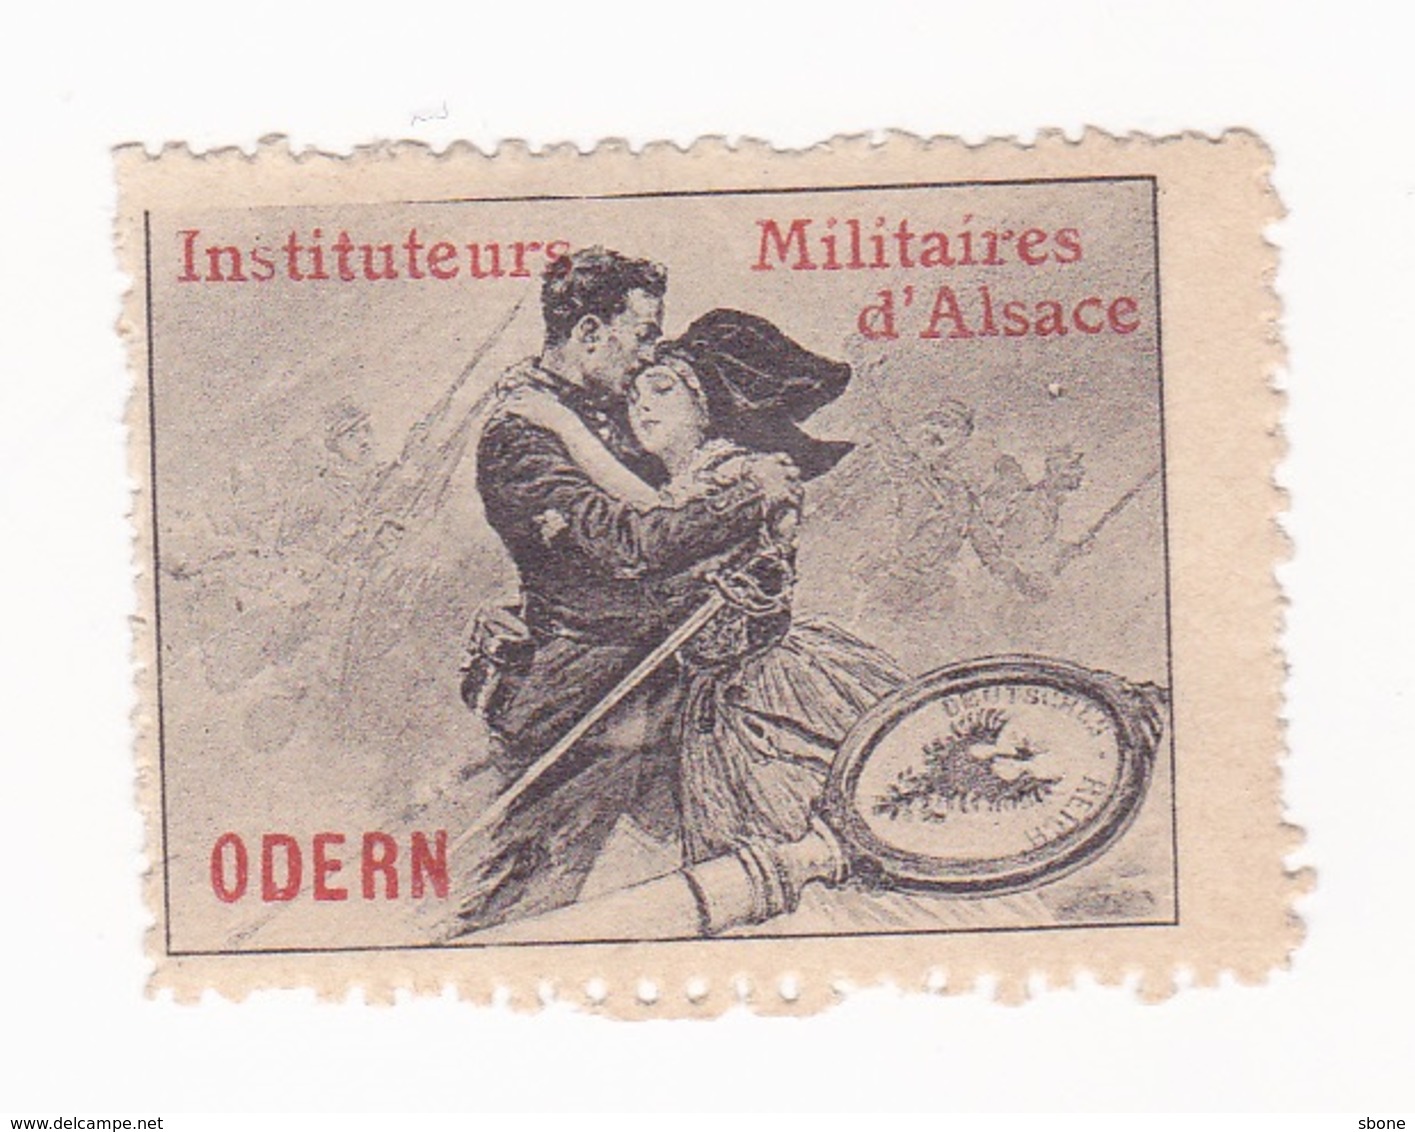 Vignette Militaire Delandre - Instituteurs Militaires D'Alsace - Odern - Militärmarken